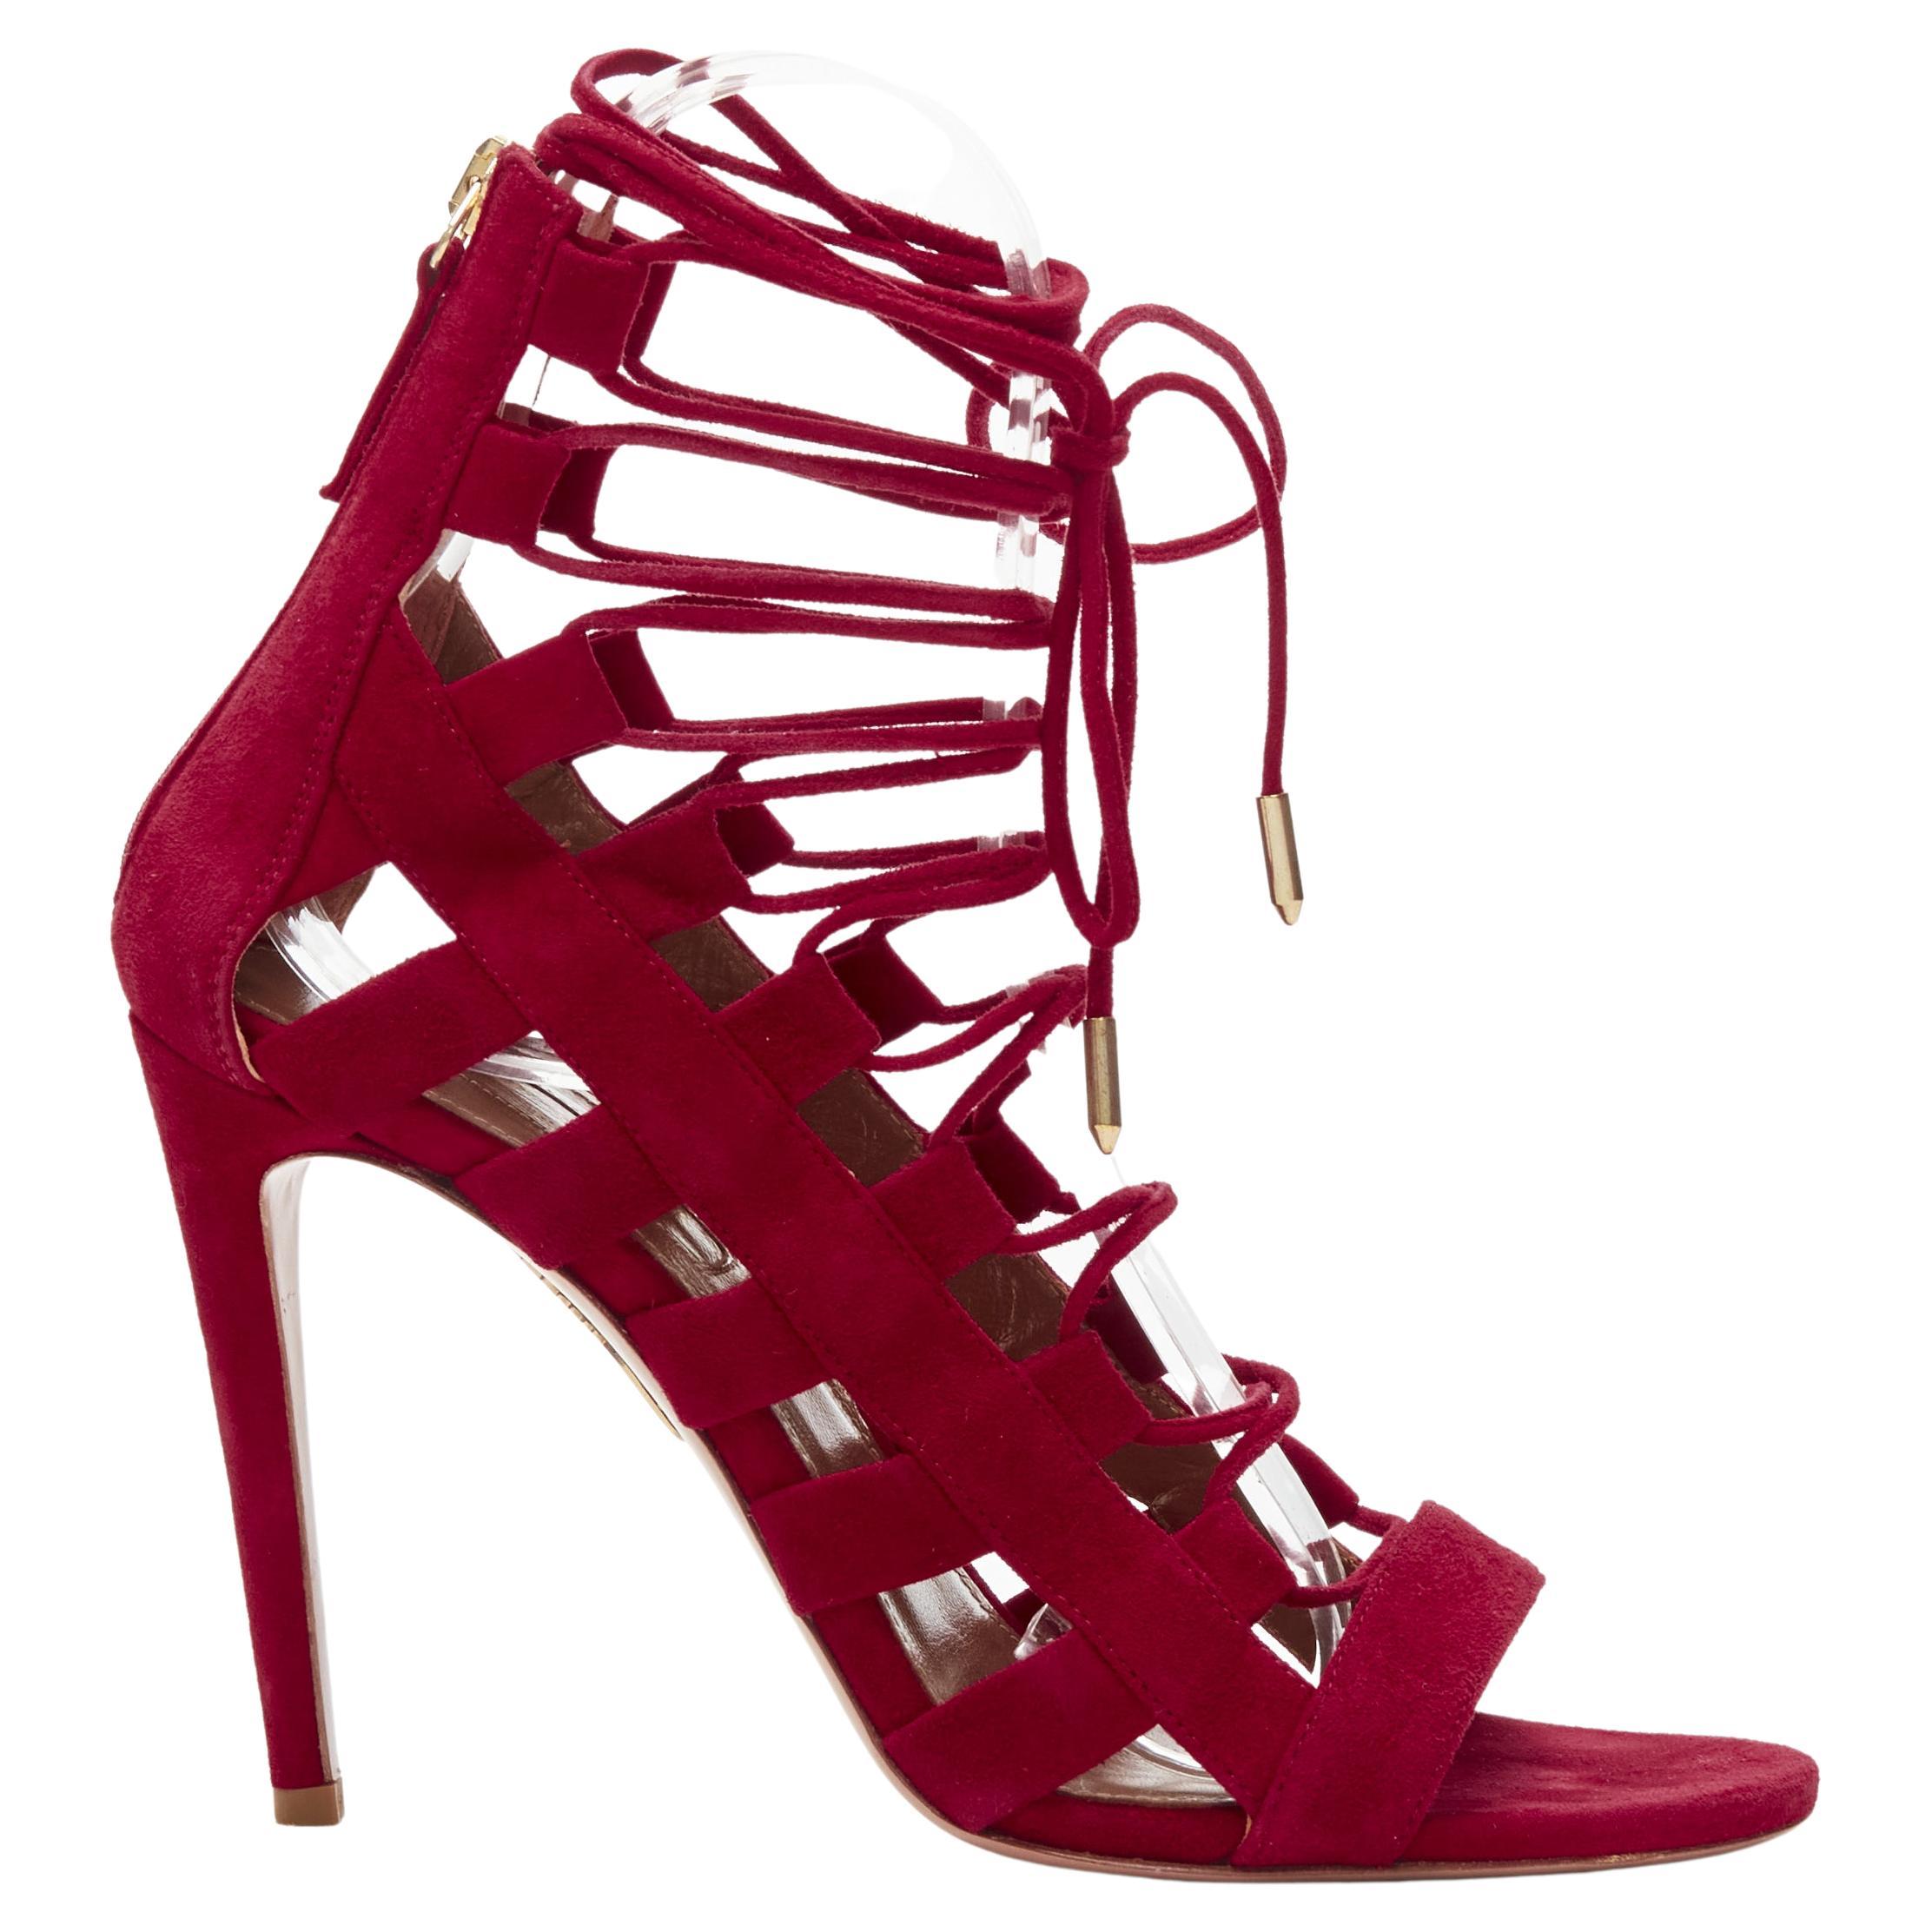 AQUAZZURA Amazon dark red suede lace up sandals high heels EU38 For Sale